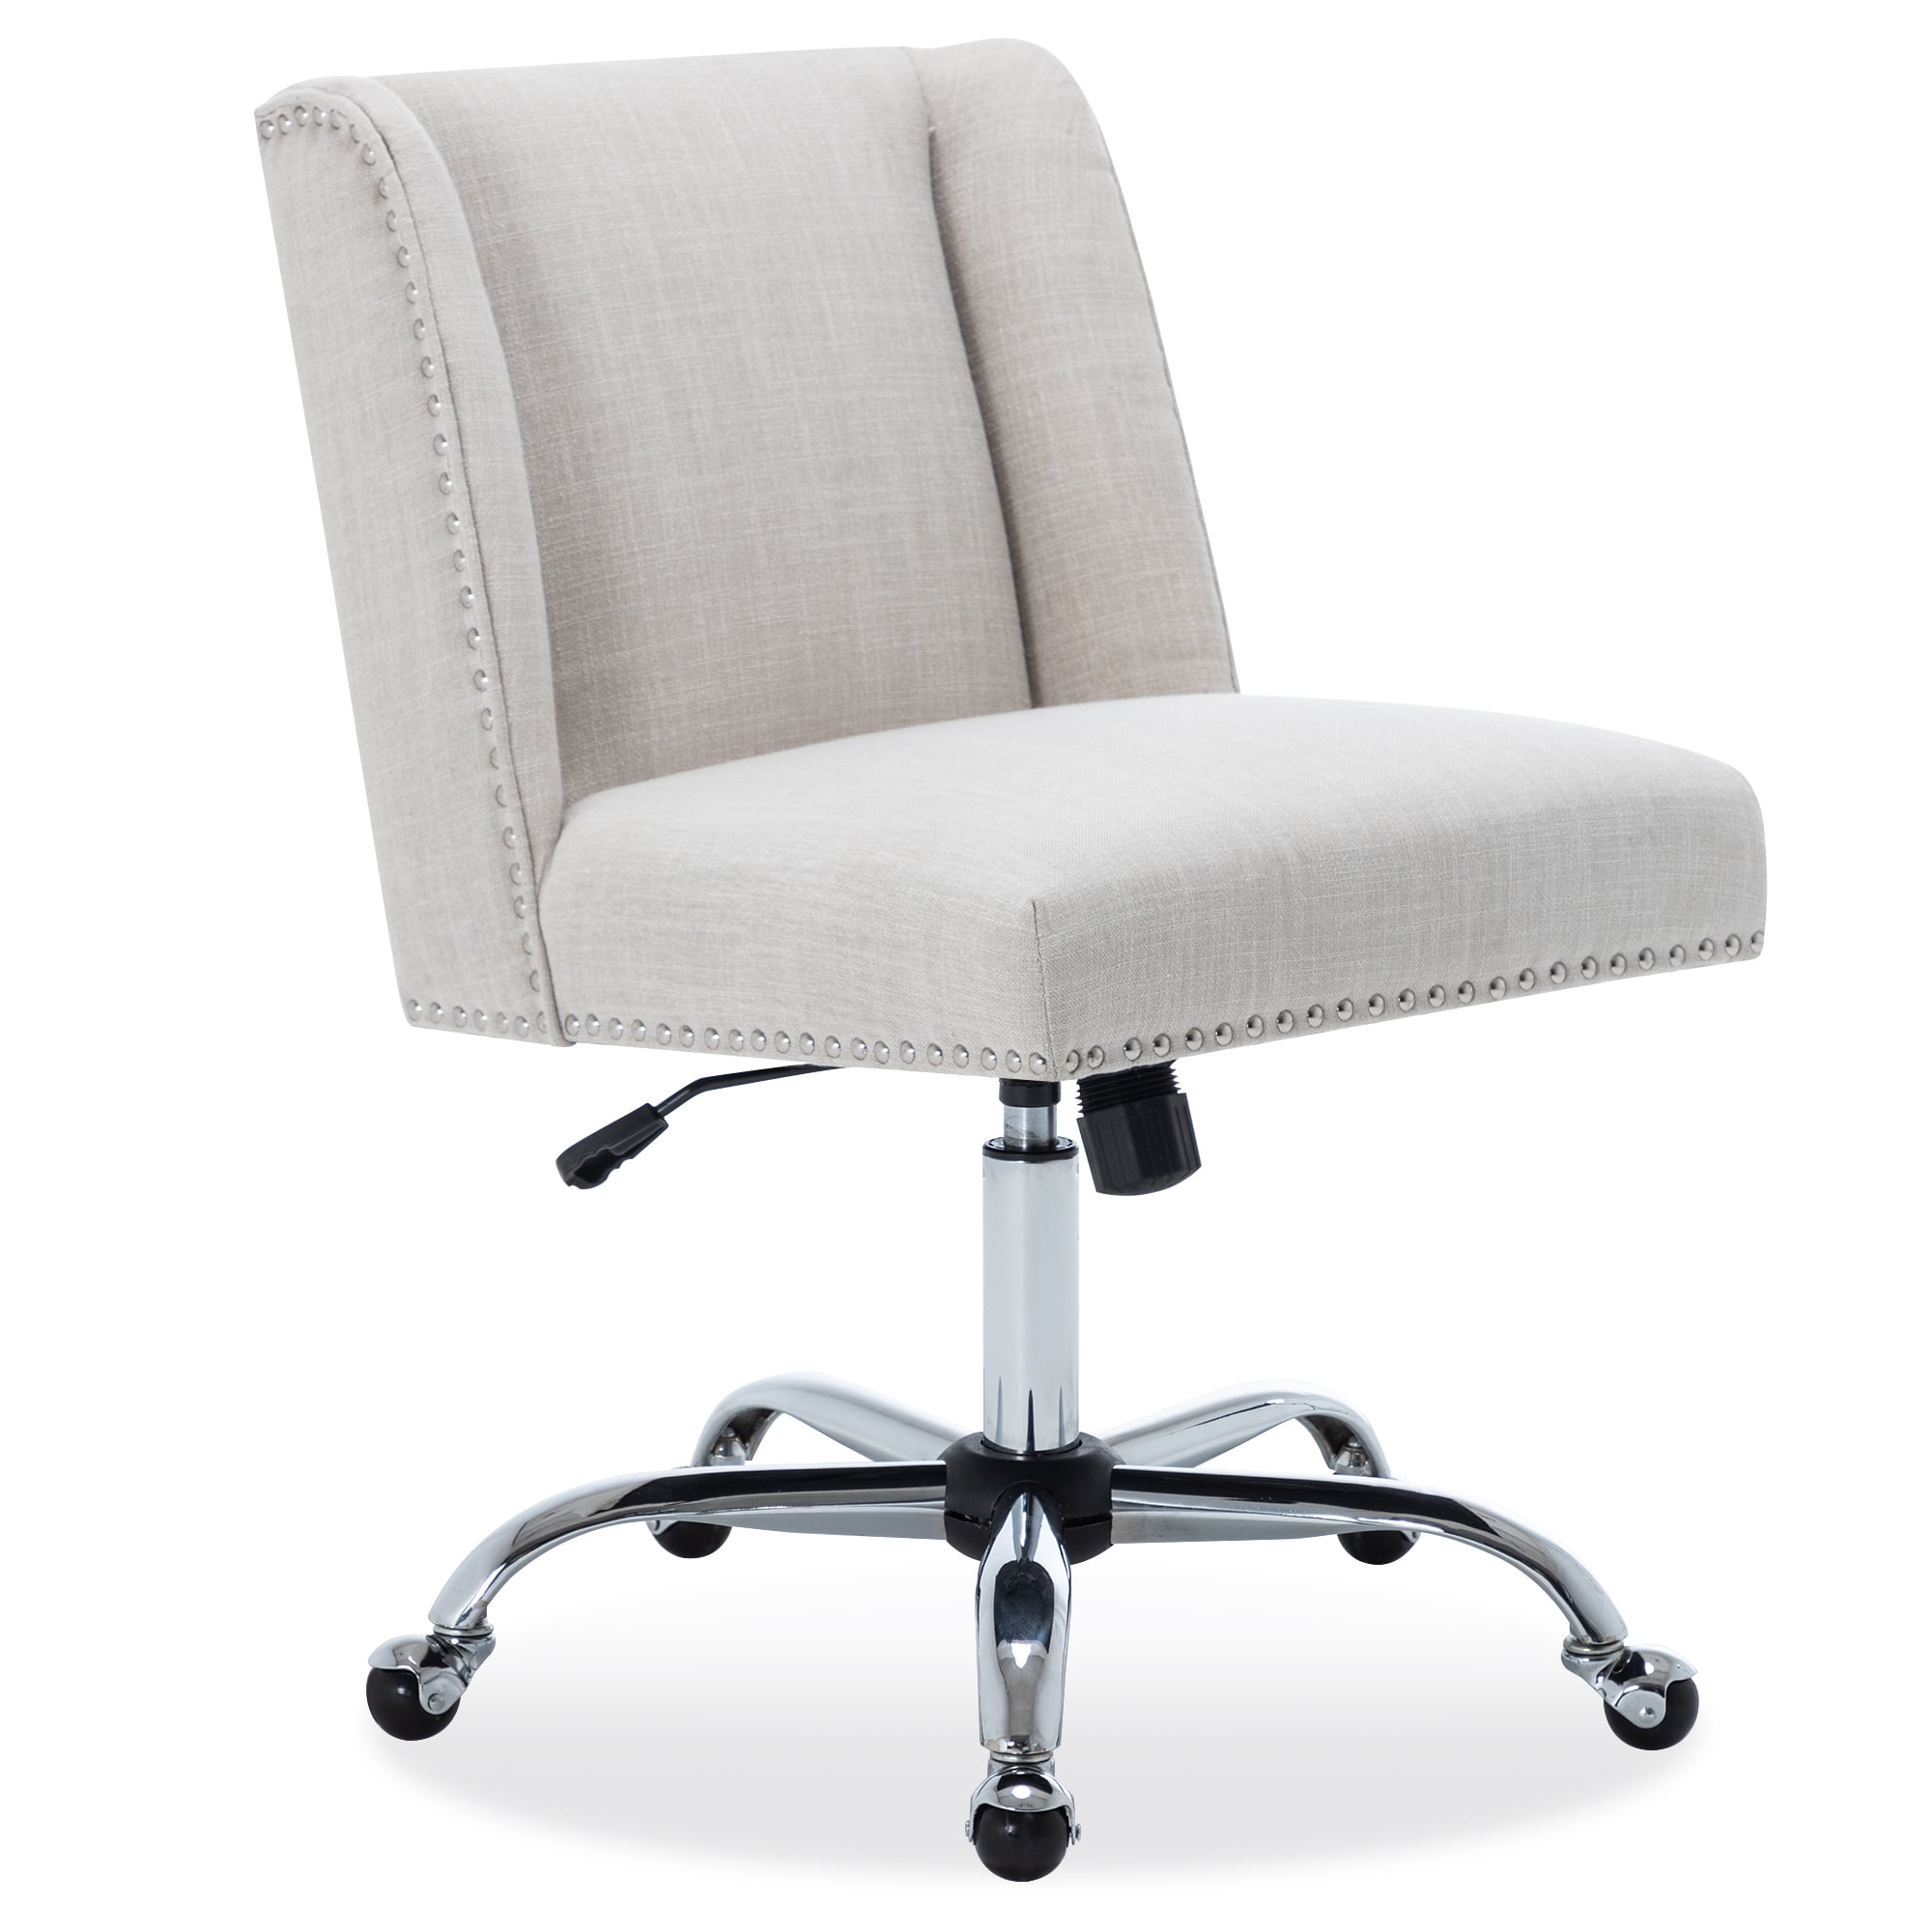 BELLEZE Upholstered Linen Office Chair Nailhead Trim Swivel Task Chair